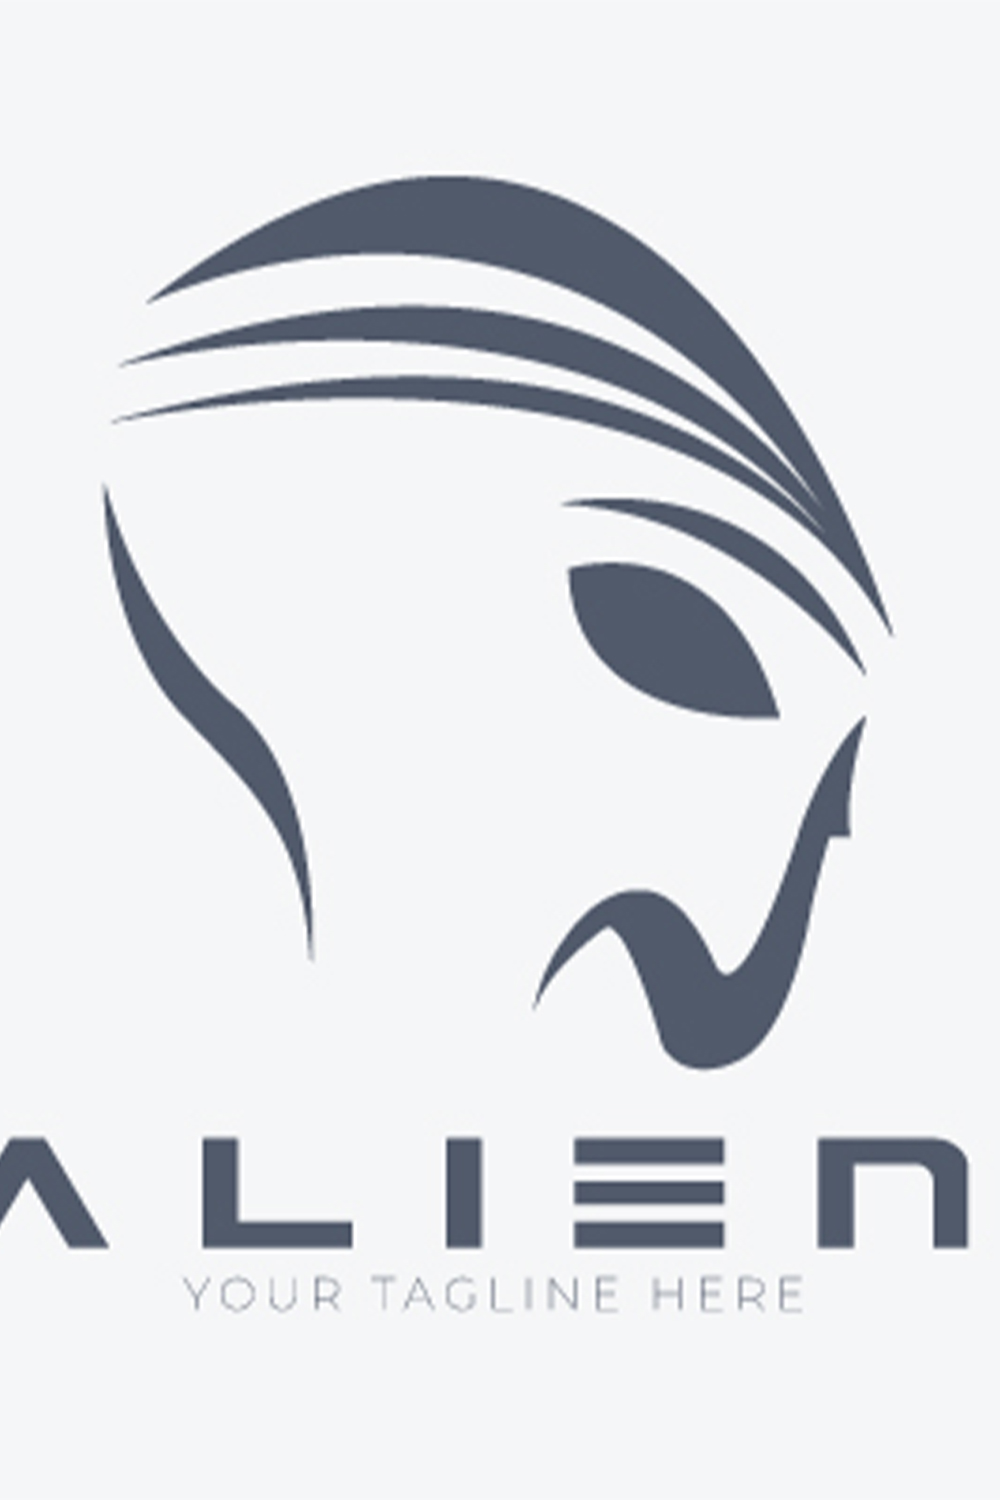 Alien Logo pinterest preview image.